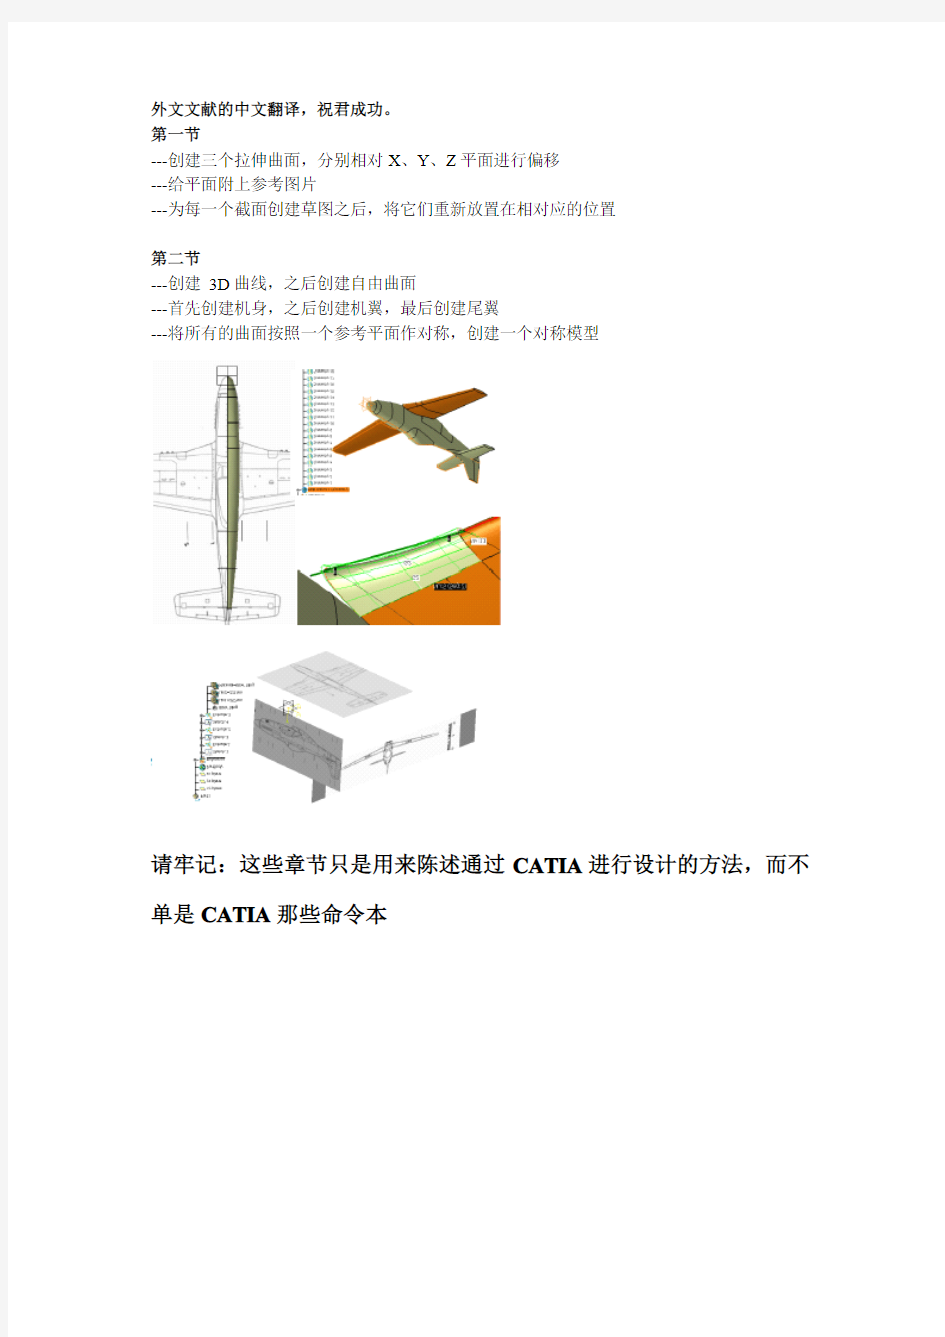 catia画飞机教程-中文实例教程-以P51为例